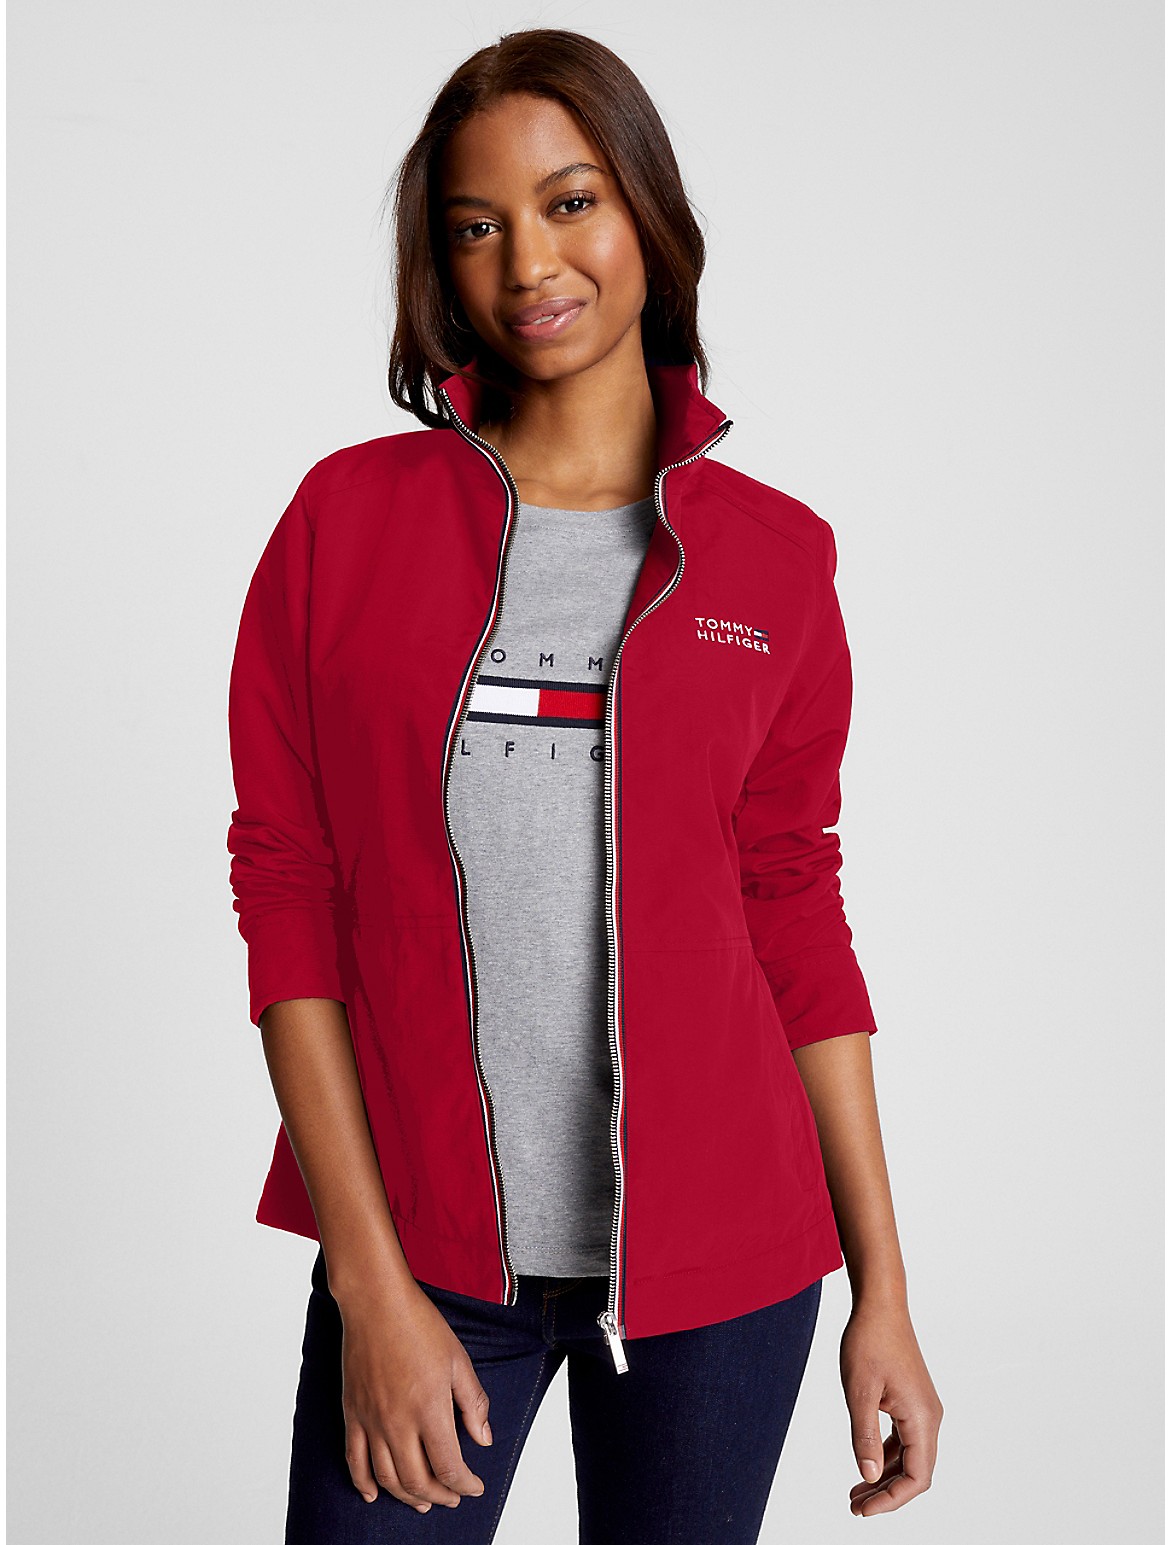 Tommy Hilfiger Women's Essential Solid Logo Yacht Jacket - Red - XL